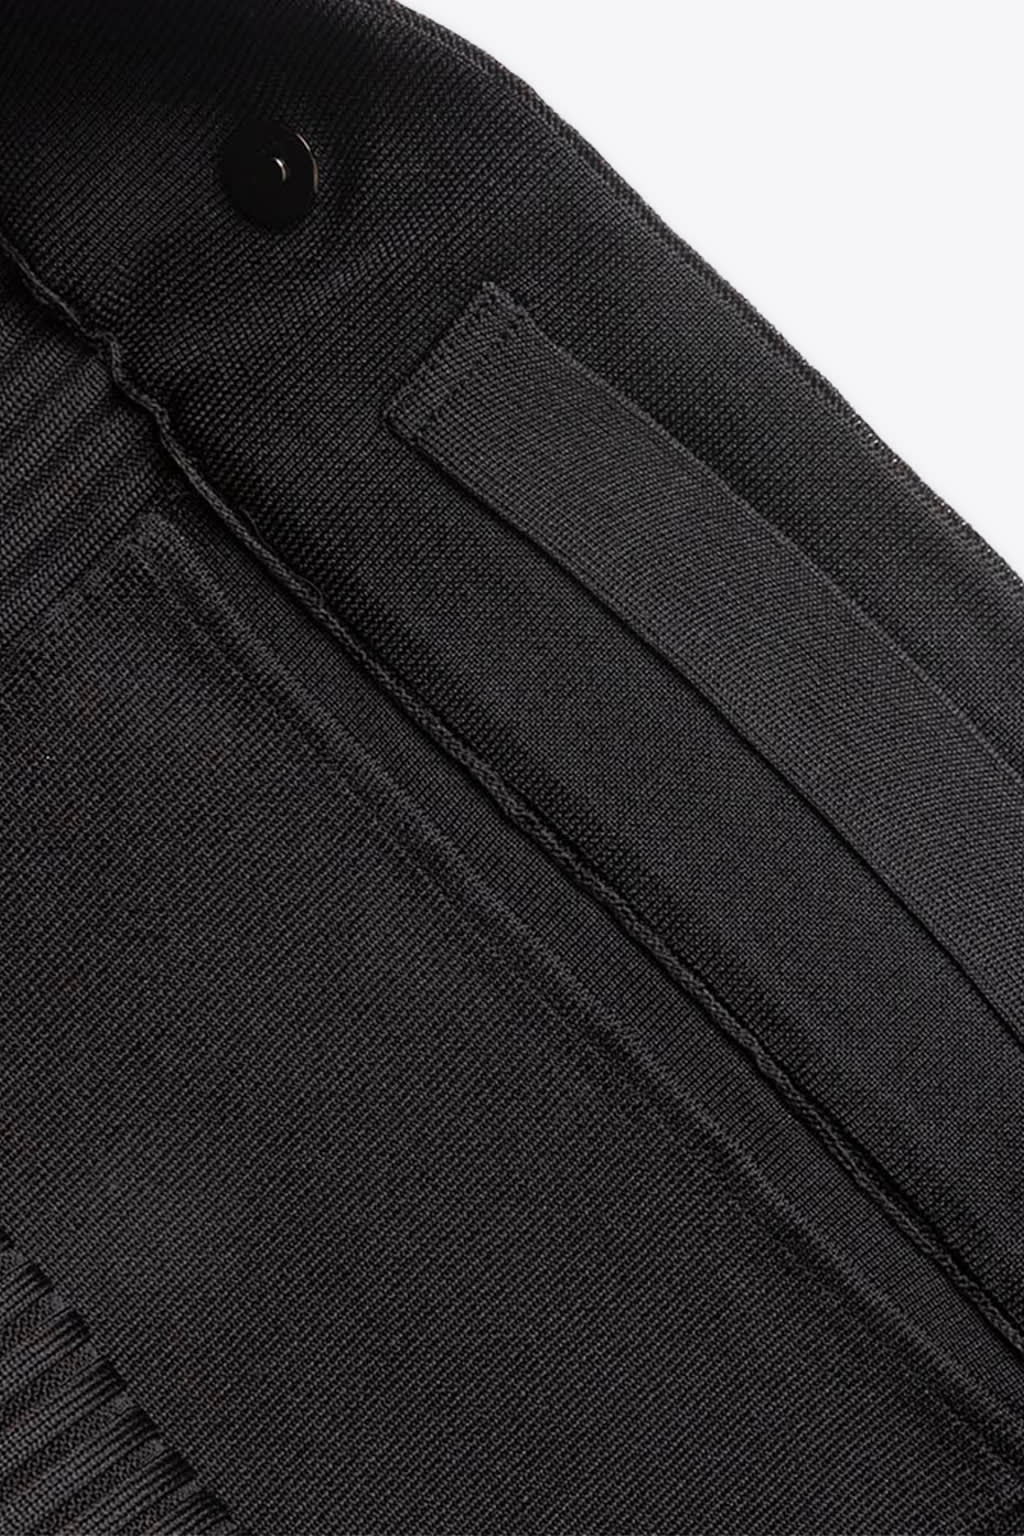 Strata Shoulder Bag 1 Black rib-knitted shopper bag - Strata shoulder bag 1